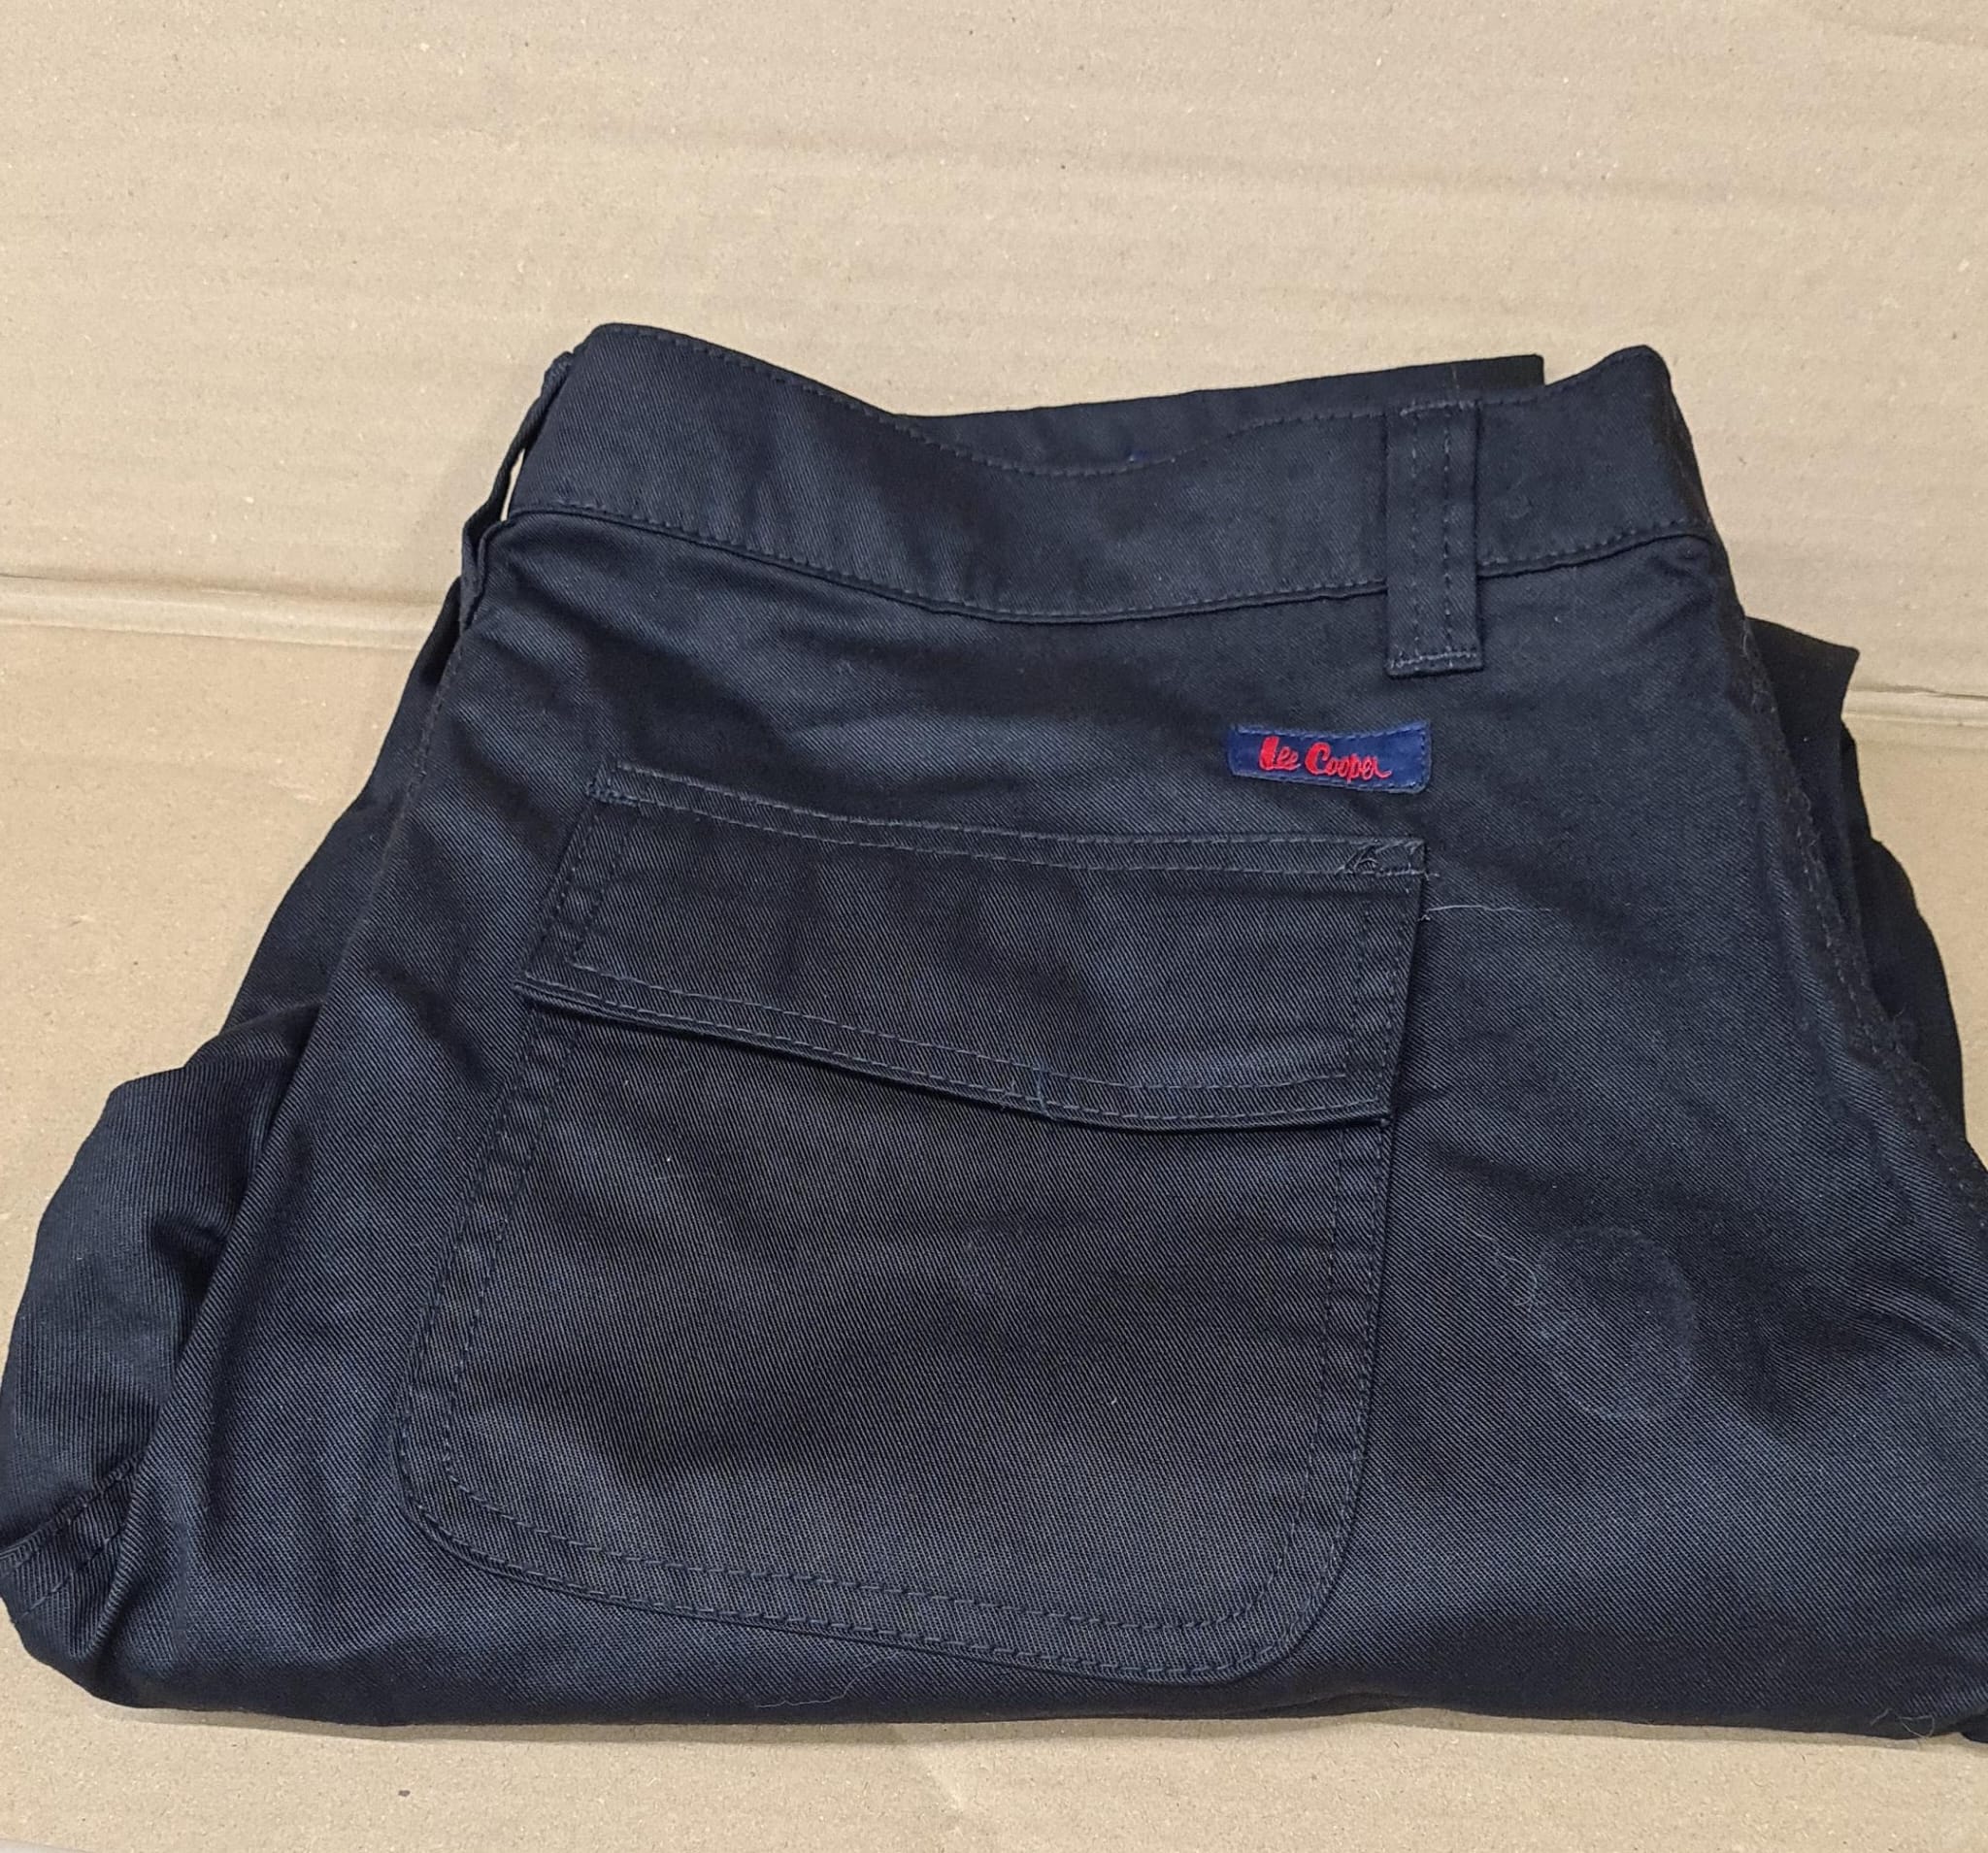 Lee Cooper Workwear Ladies Classic Cargo Work Trouser, Black, 18 (30" Reg Leg) - 2865